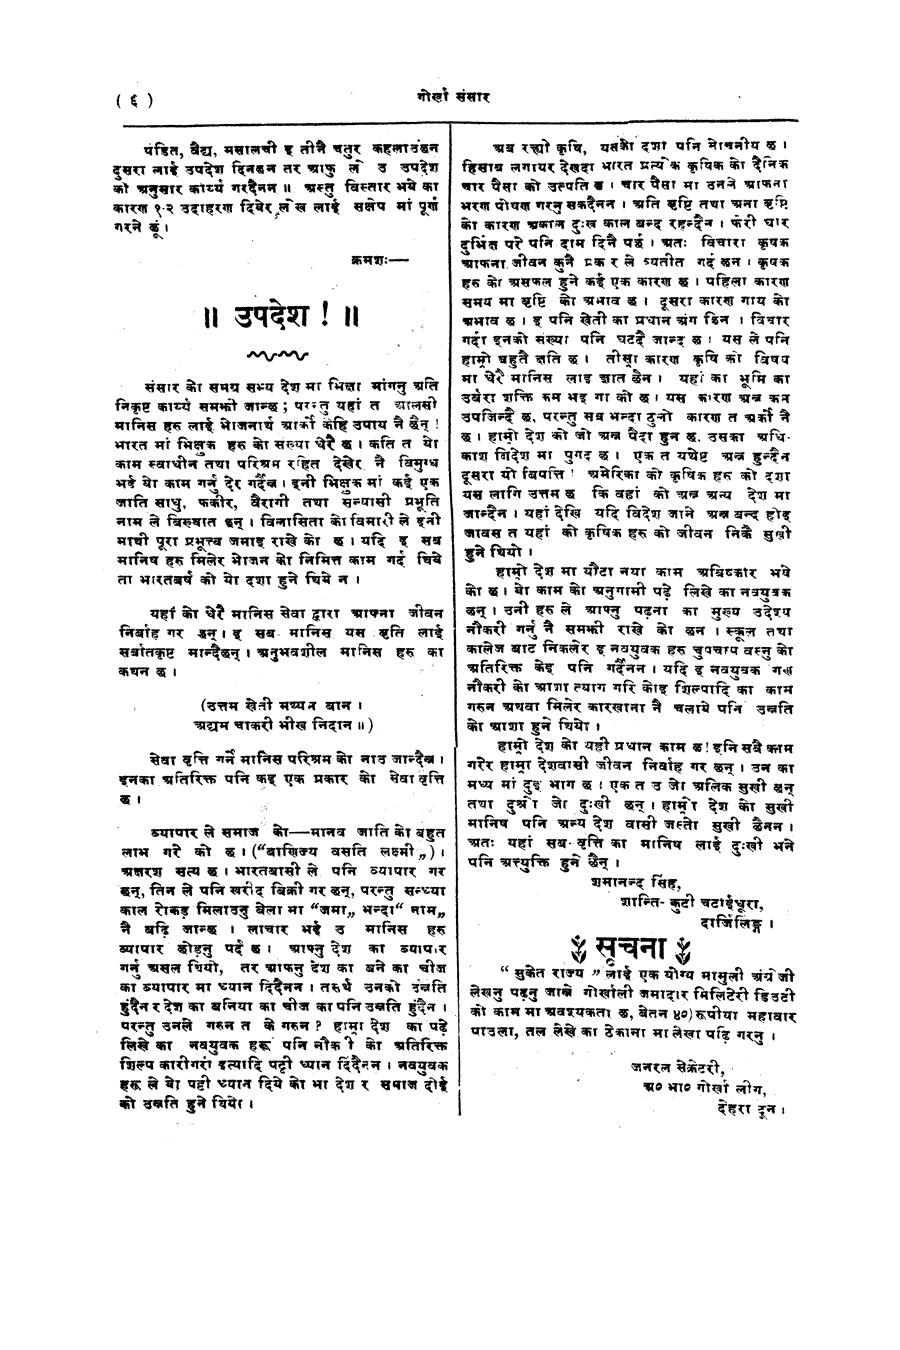 Gorkha Sansar, 8 June 1928, page 6